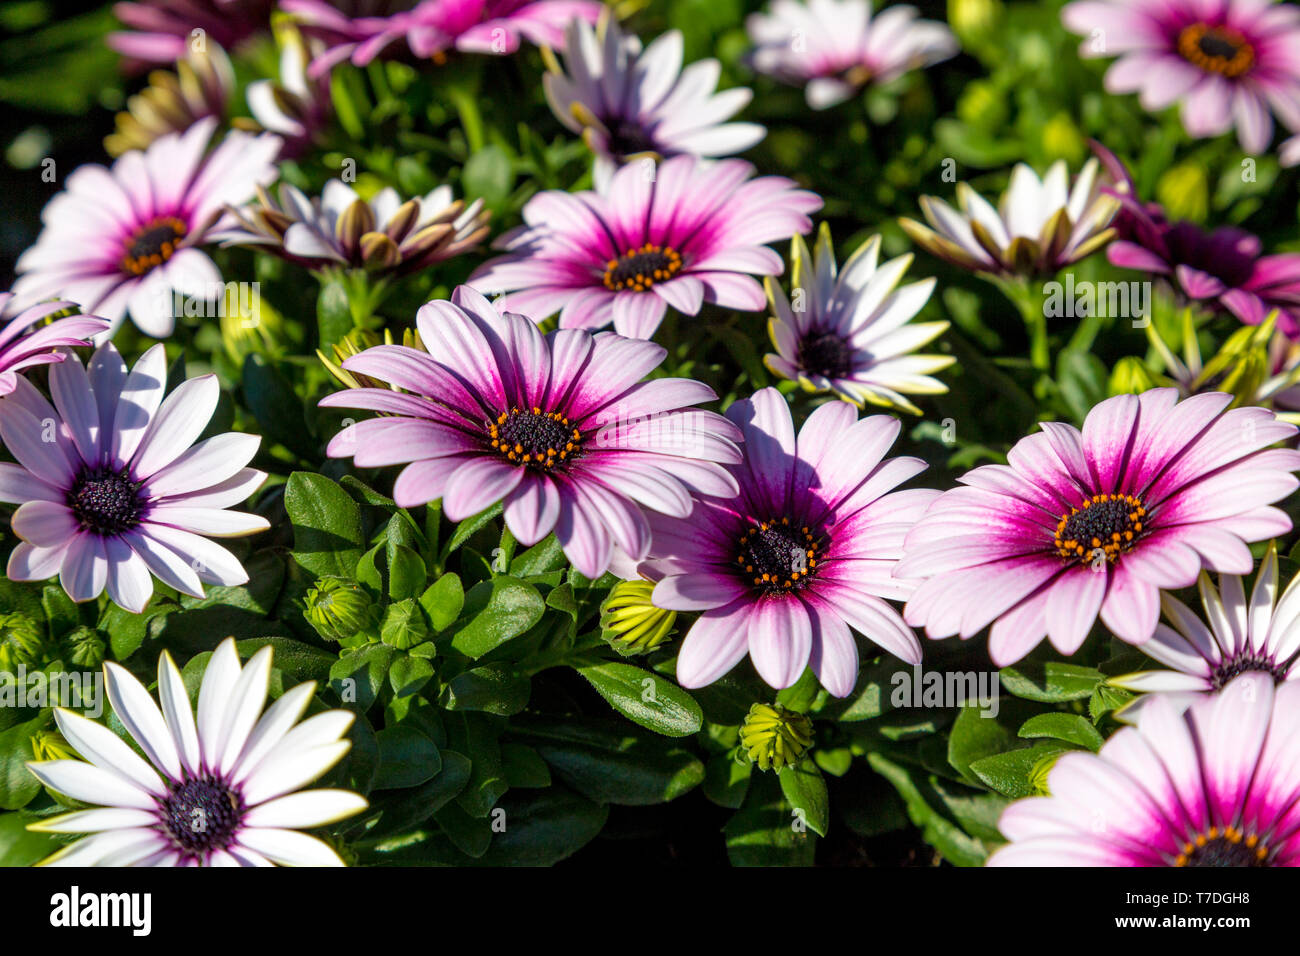 Osteospermum, purple pink daisy flowers Stock Photo